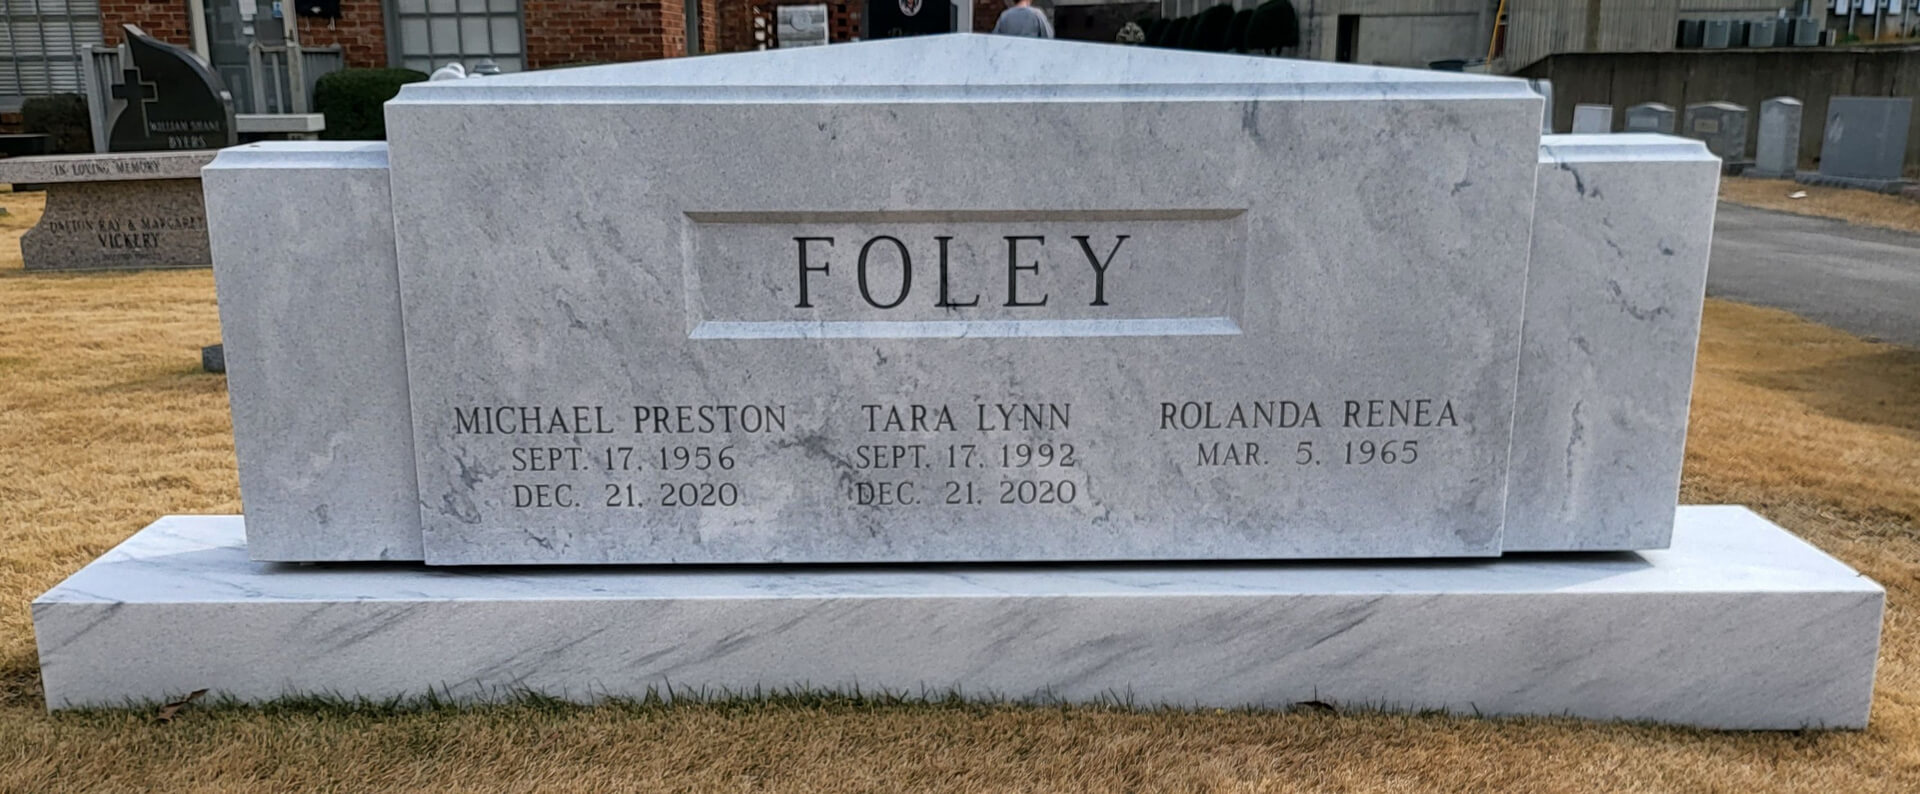 A memorial slab with the name Michel Preston and Tara Lynn